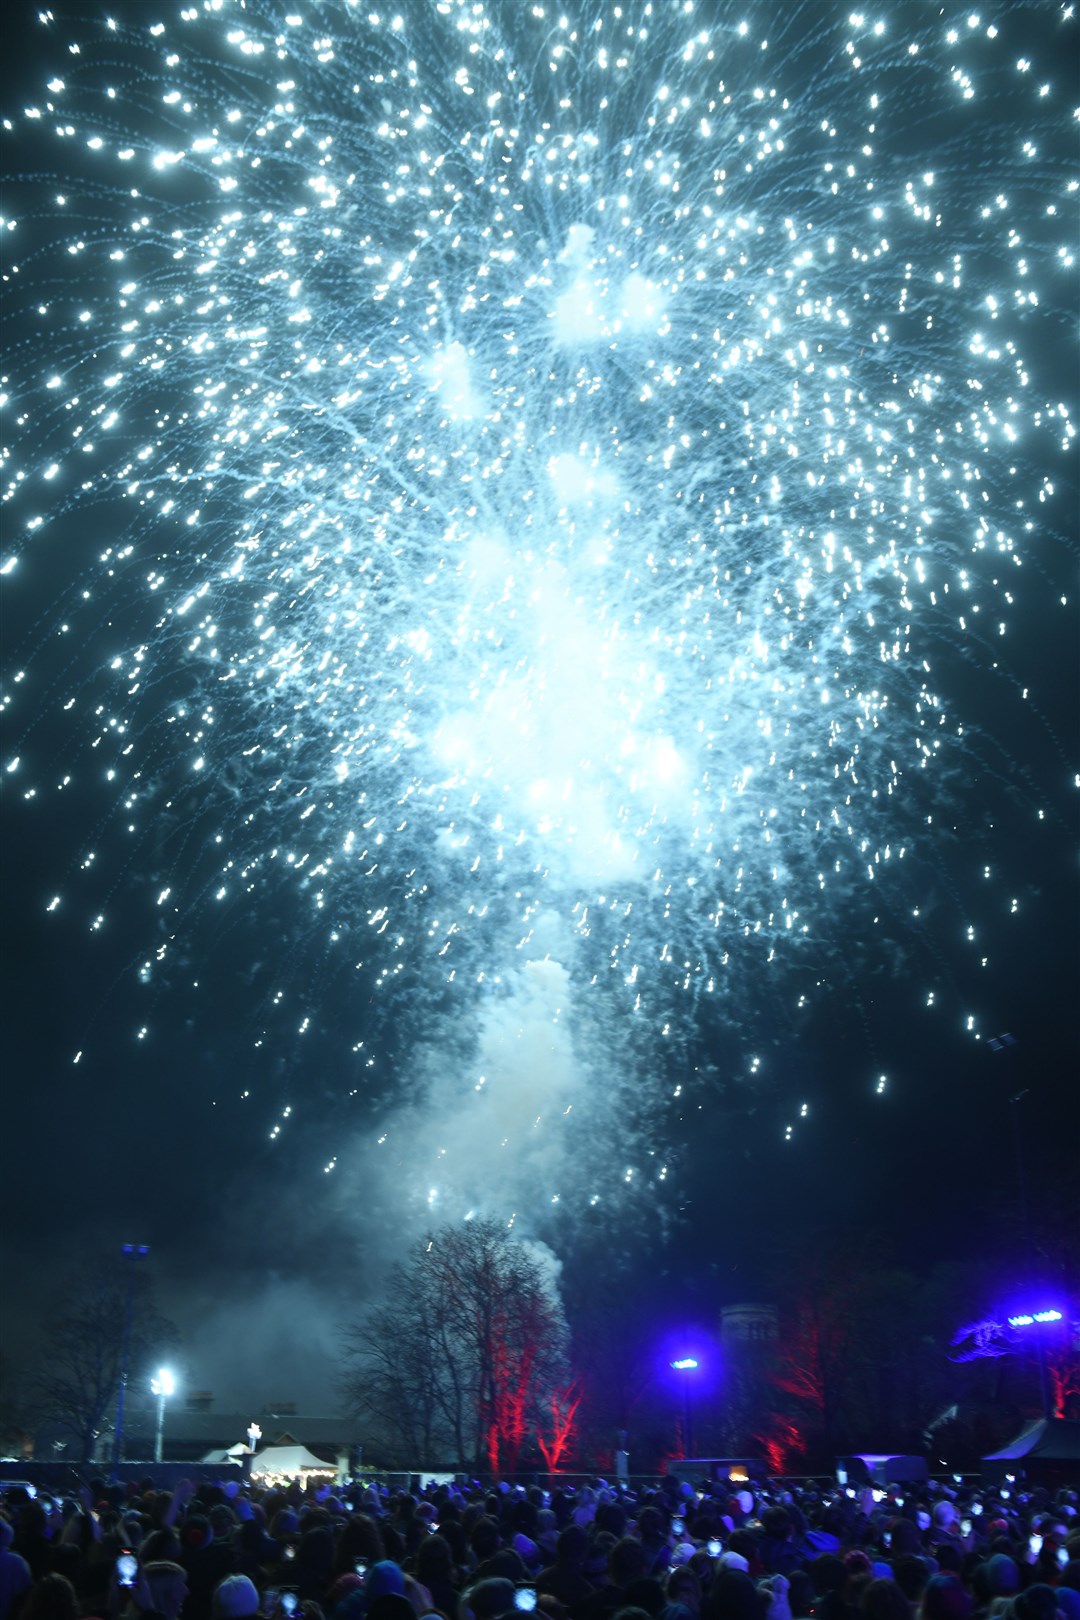 Fireworks display finale.